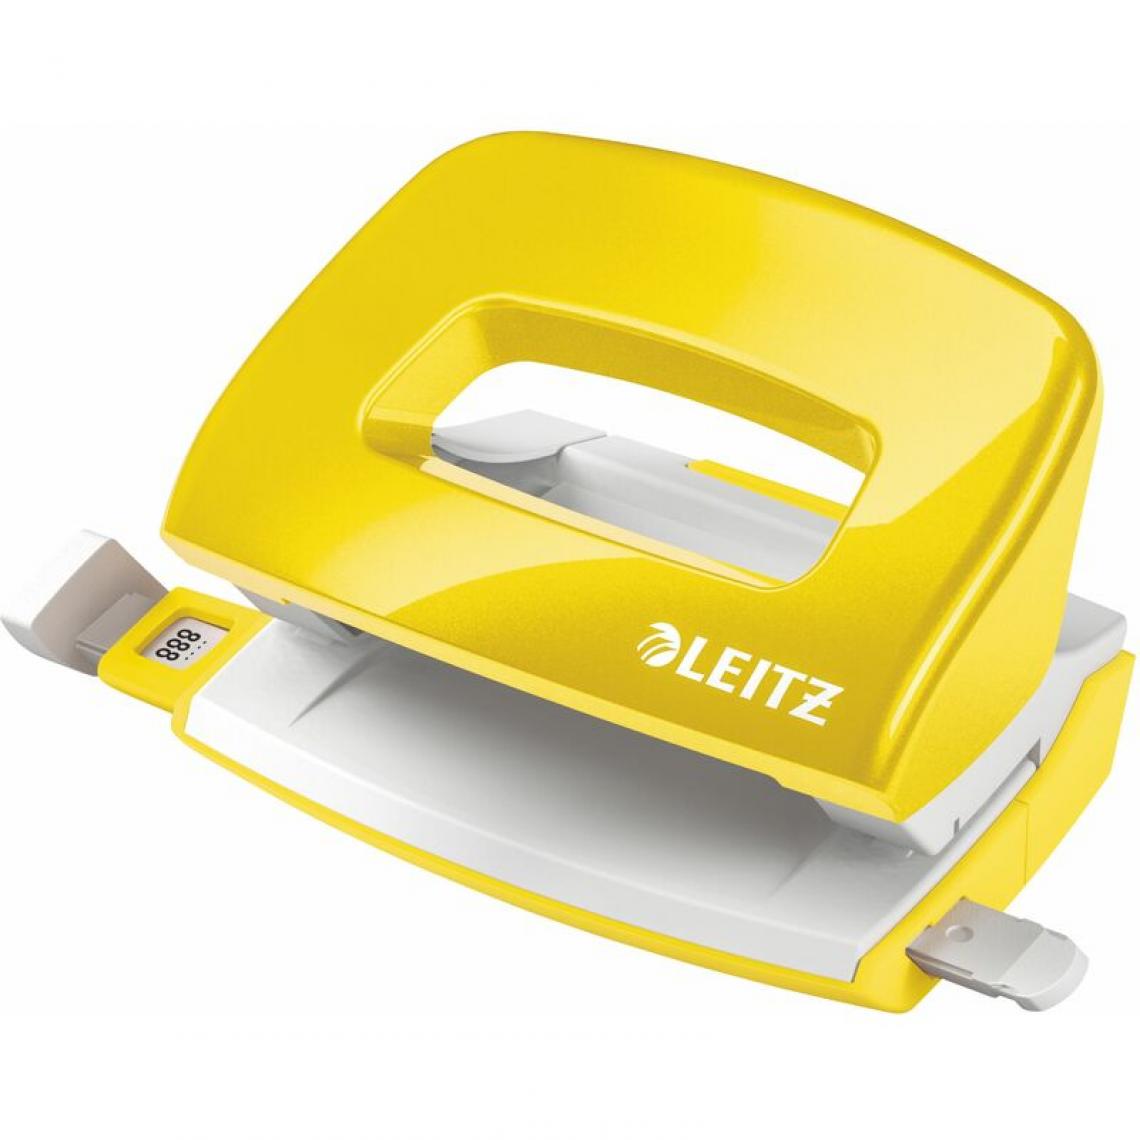 Leitz - LEITZ Perforateur Nexxt 5060, en carton, jaune métallisé () - Accessoires Bureau